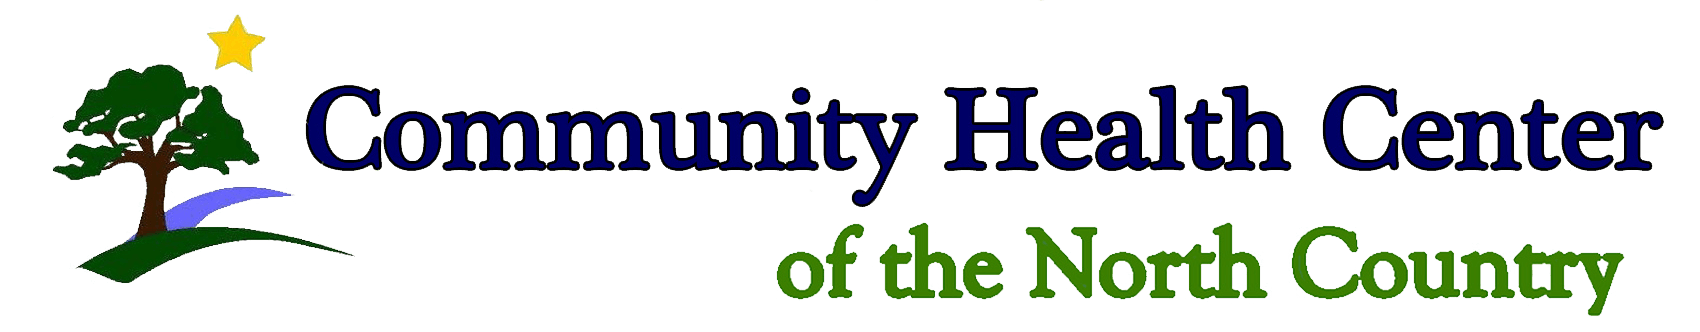 Community-Health-Center-logo